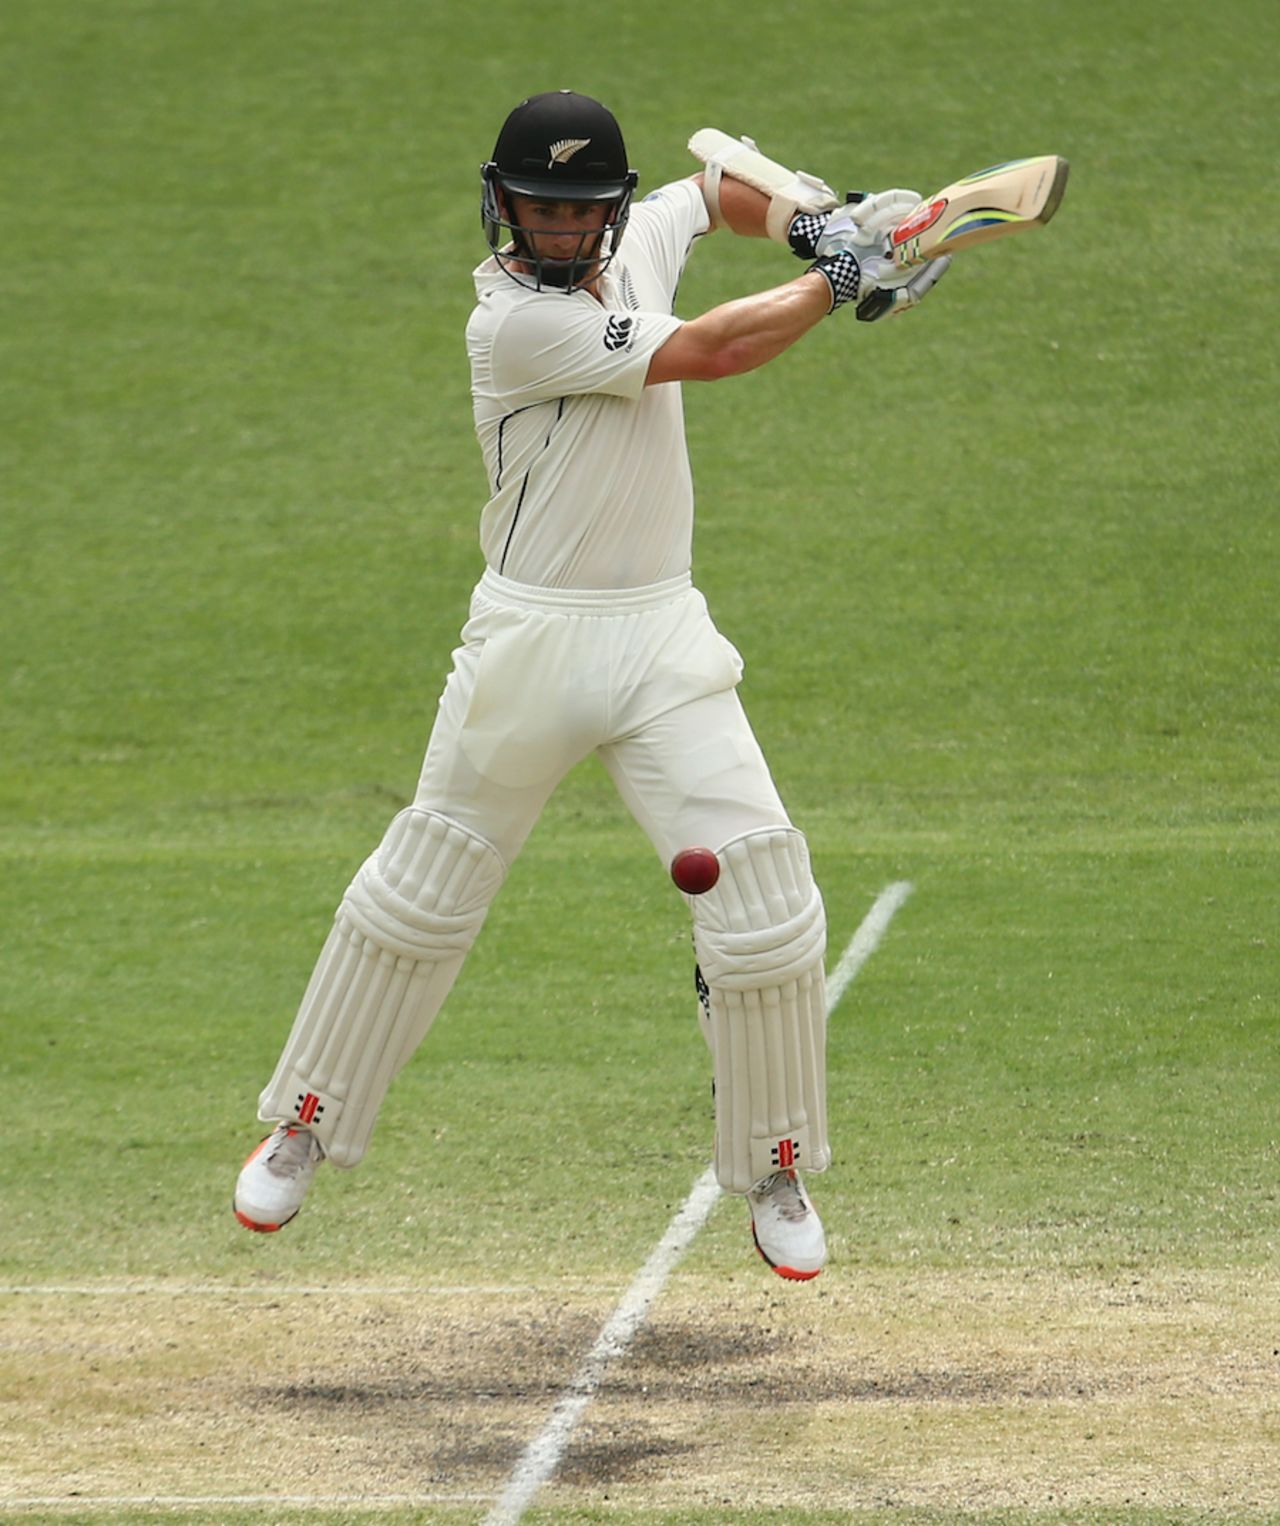 Kane Williamson goes air-borne, Australia v New Zealand, 1st Test, Brisbane, 4th day, November 8, 2015